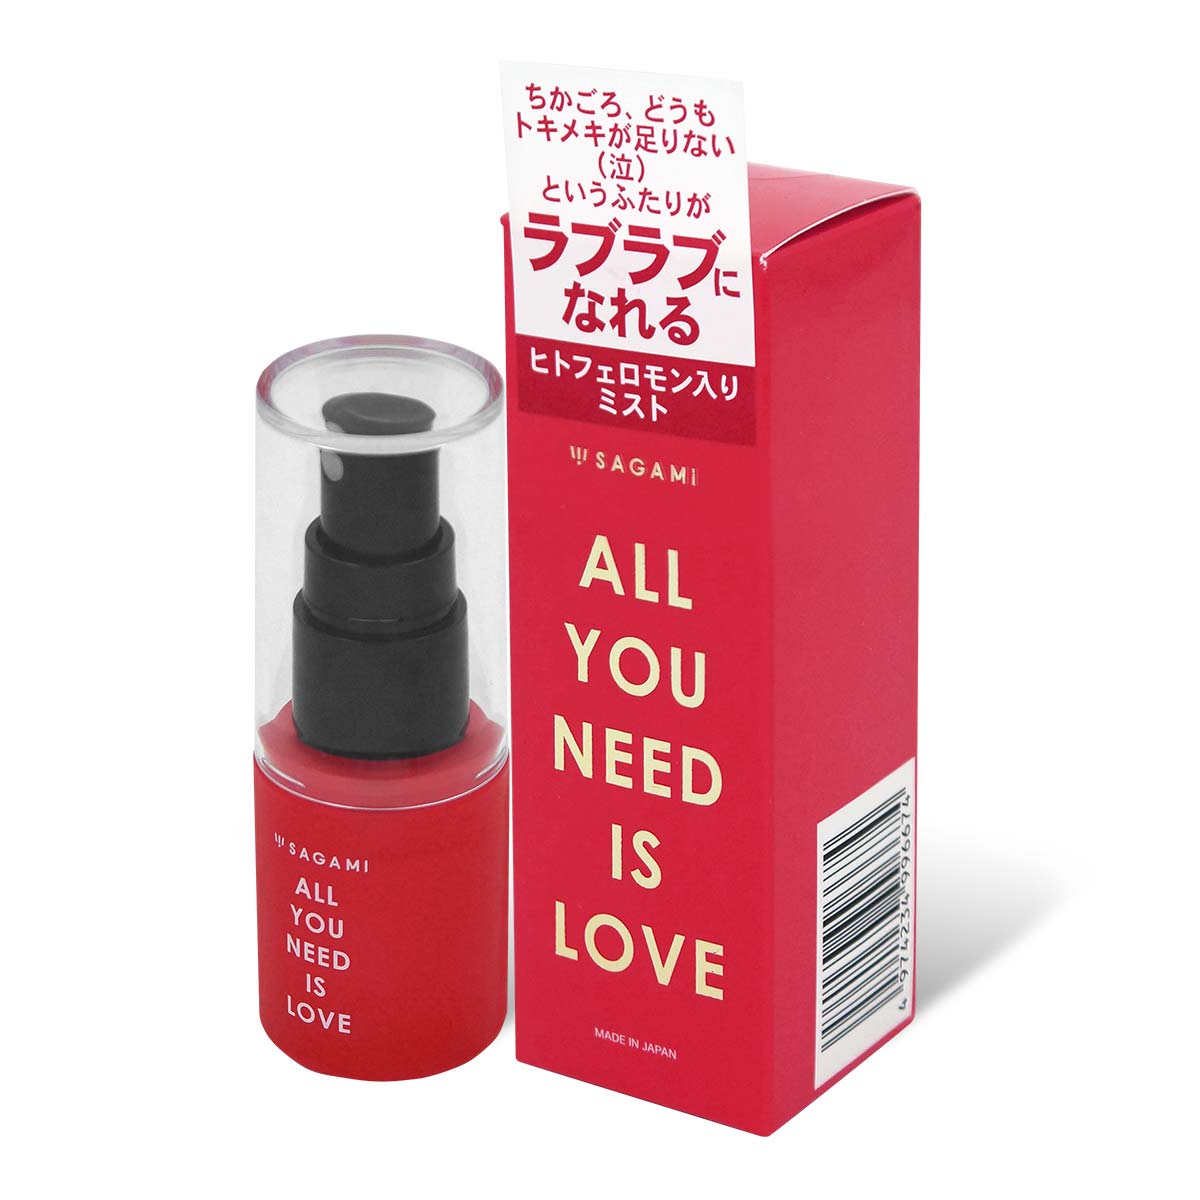 Sagami ALL YOU NEED IS LOVE 30ml pheromone spray-p_1